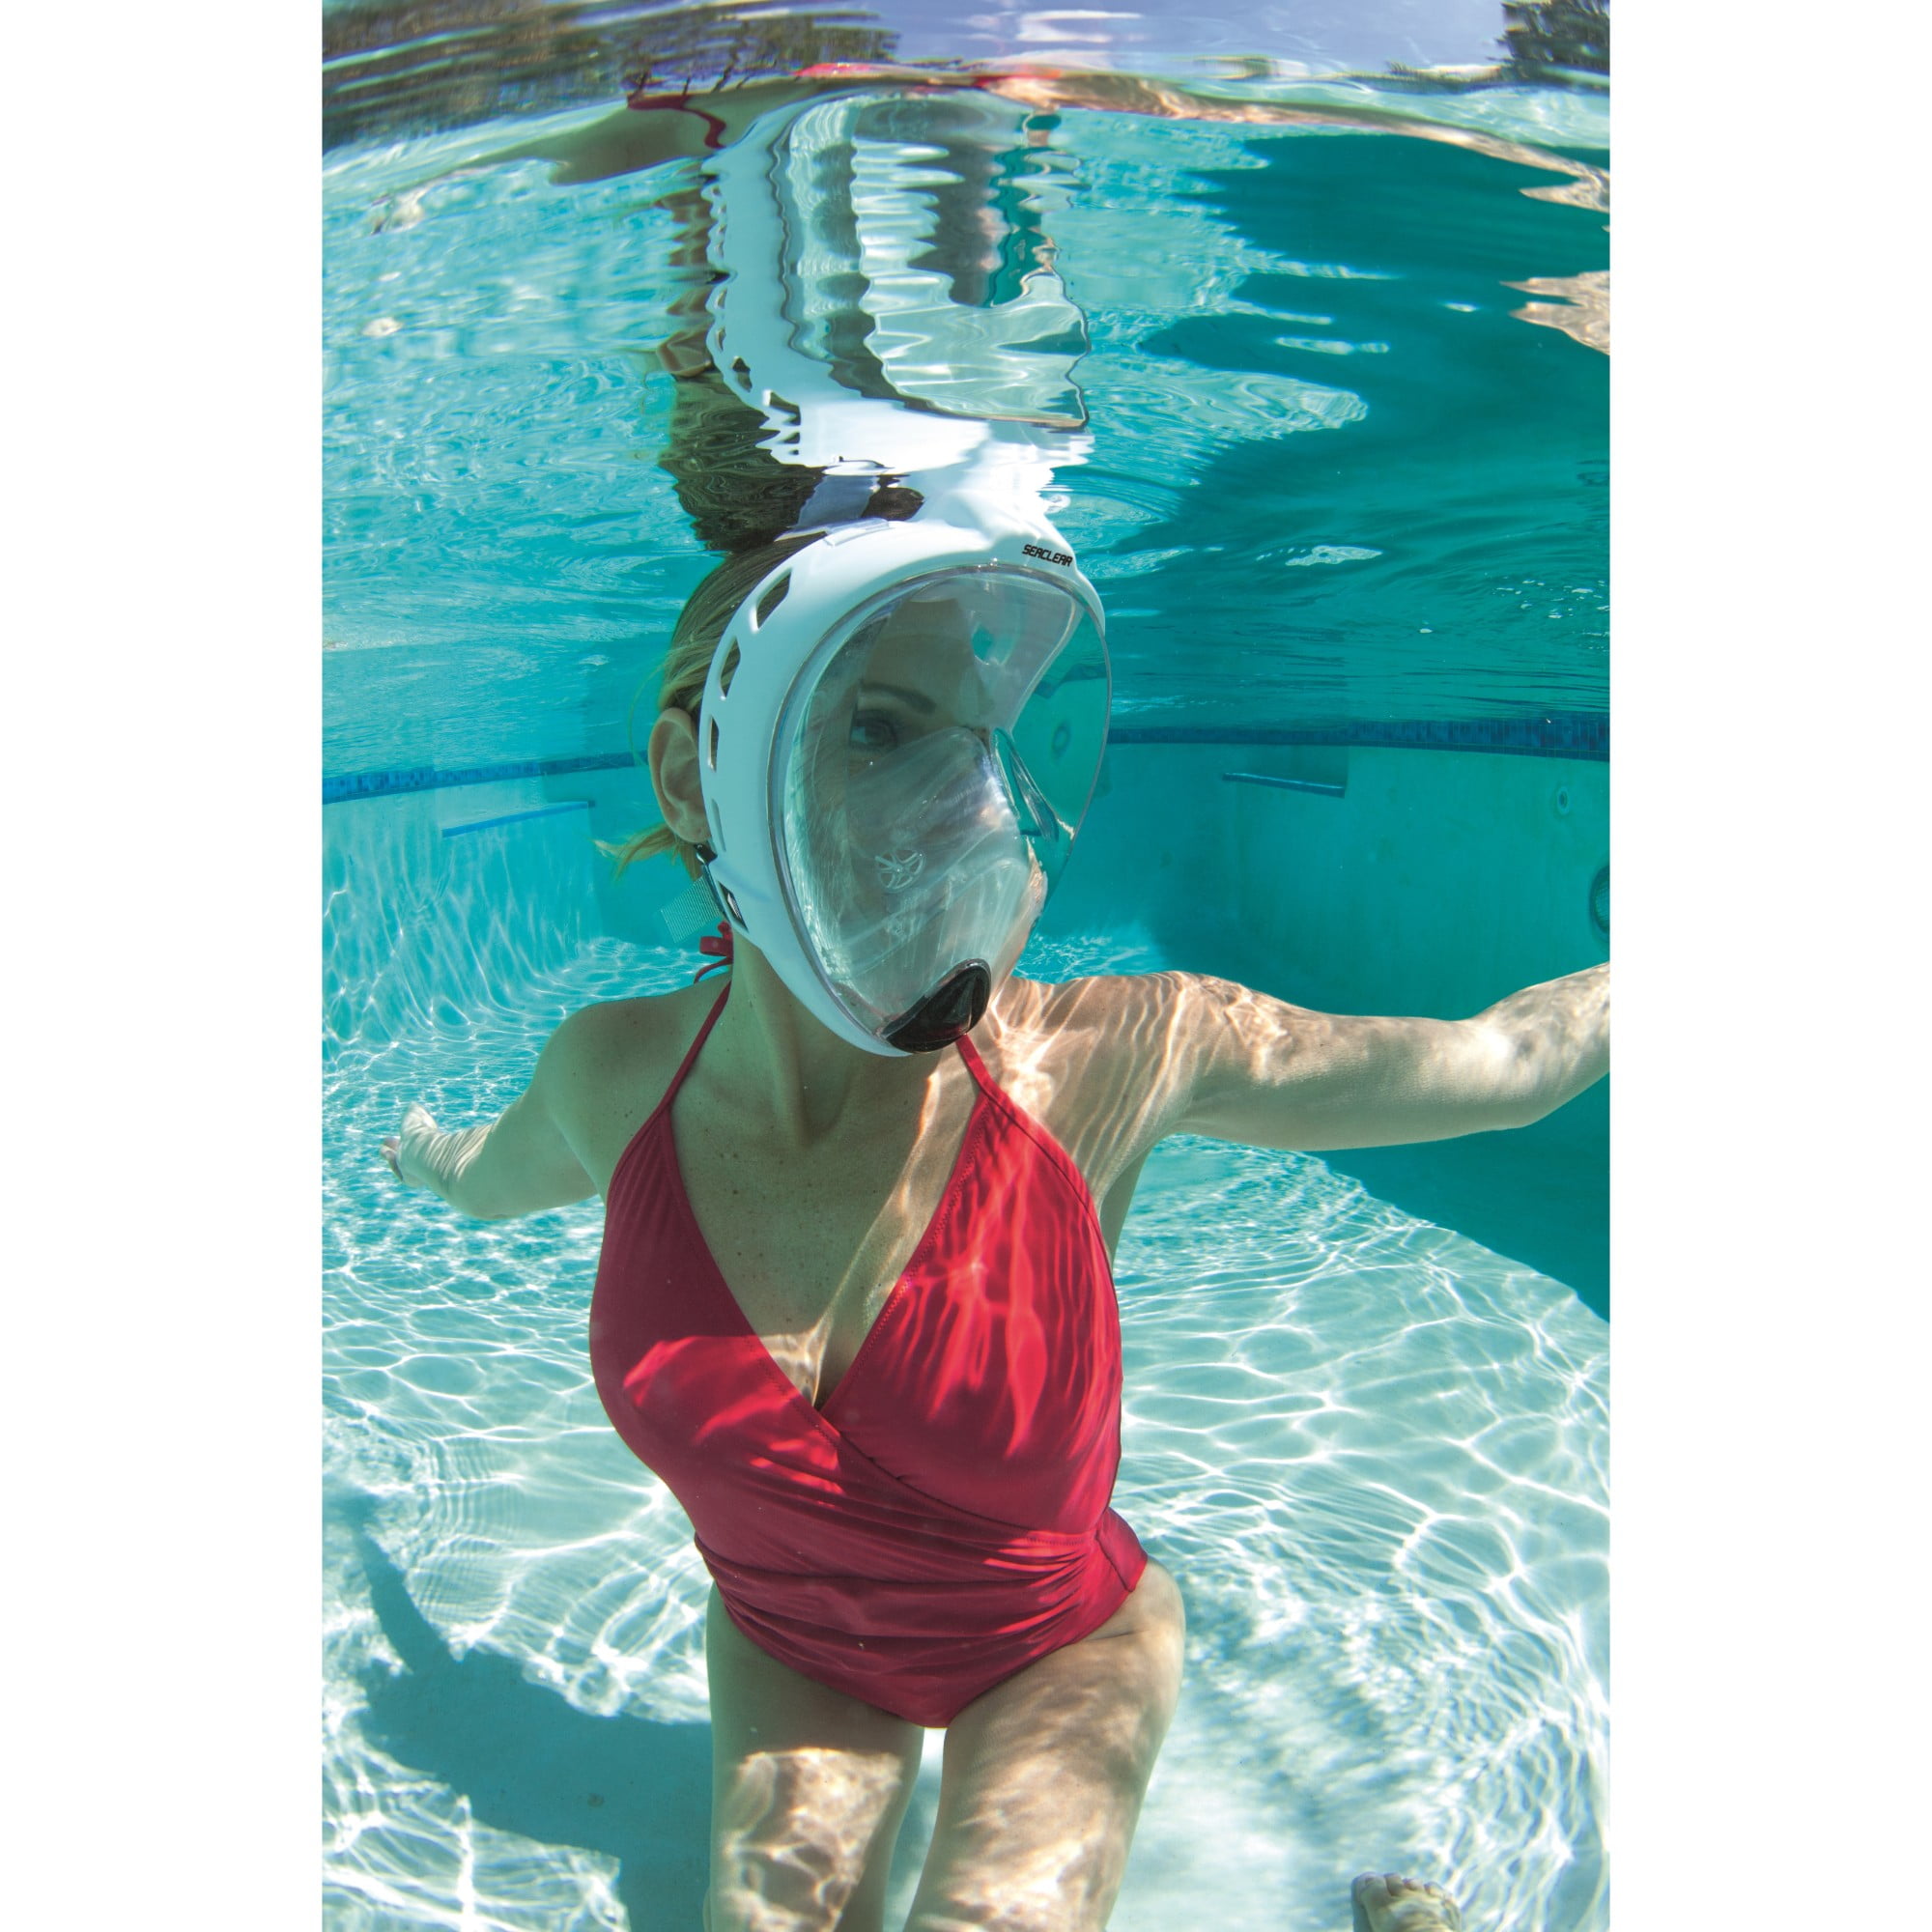 Bestway Masque Snorkeling Hydro-Pro Seaclear Bleu